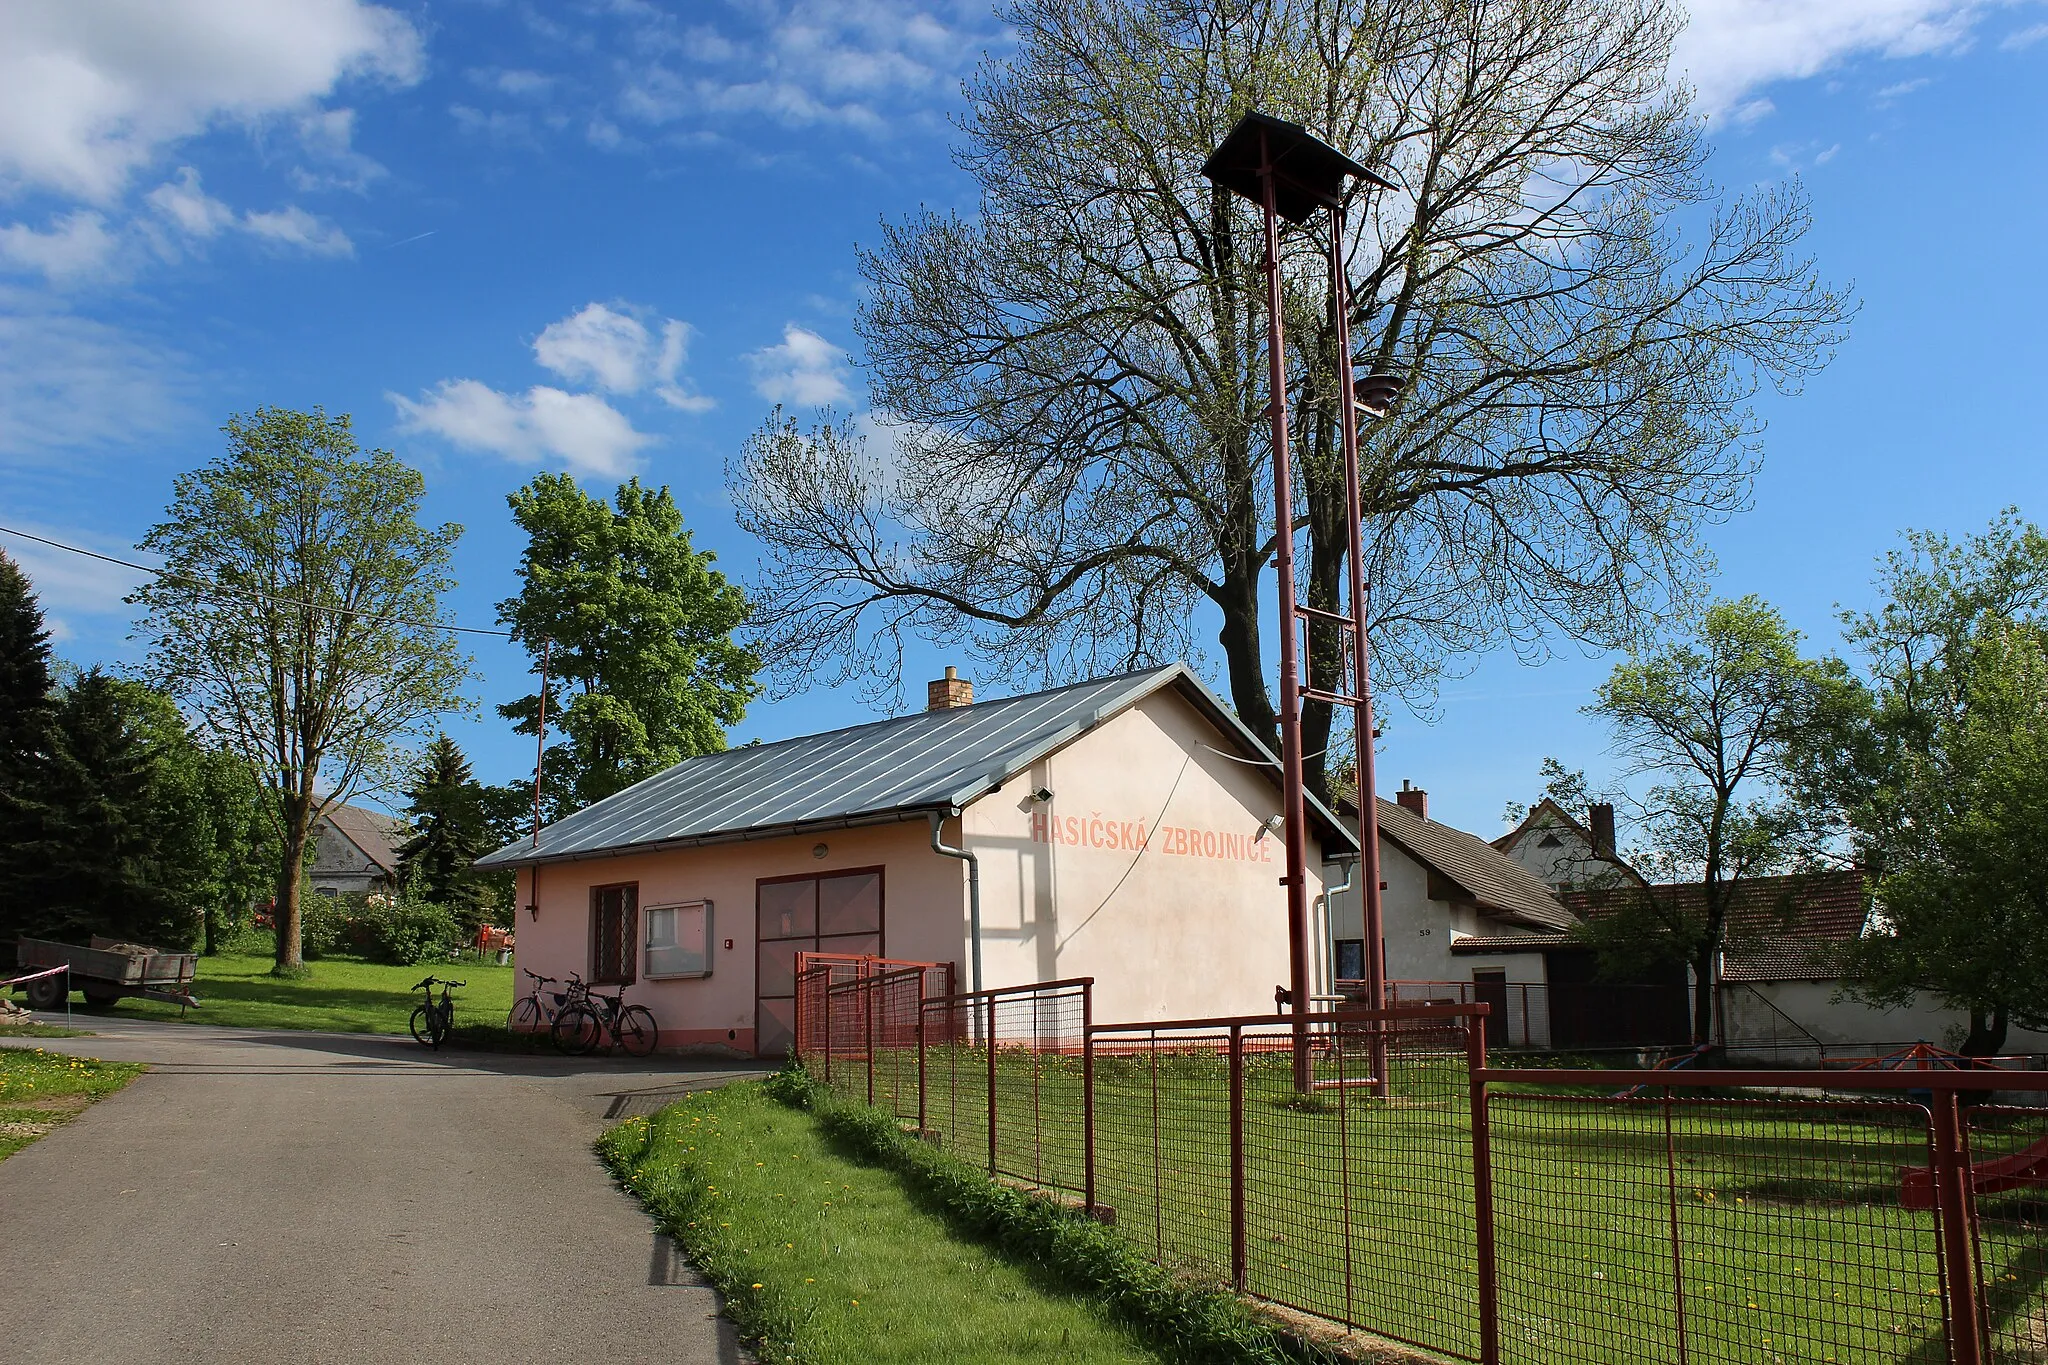 Photo showing: Fire house in Sirákov, Czech Republic